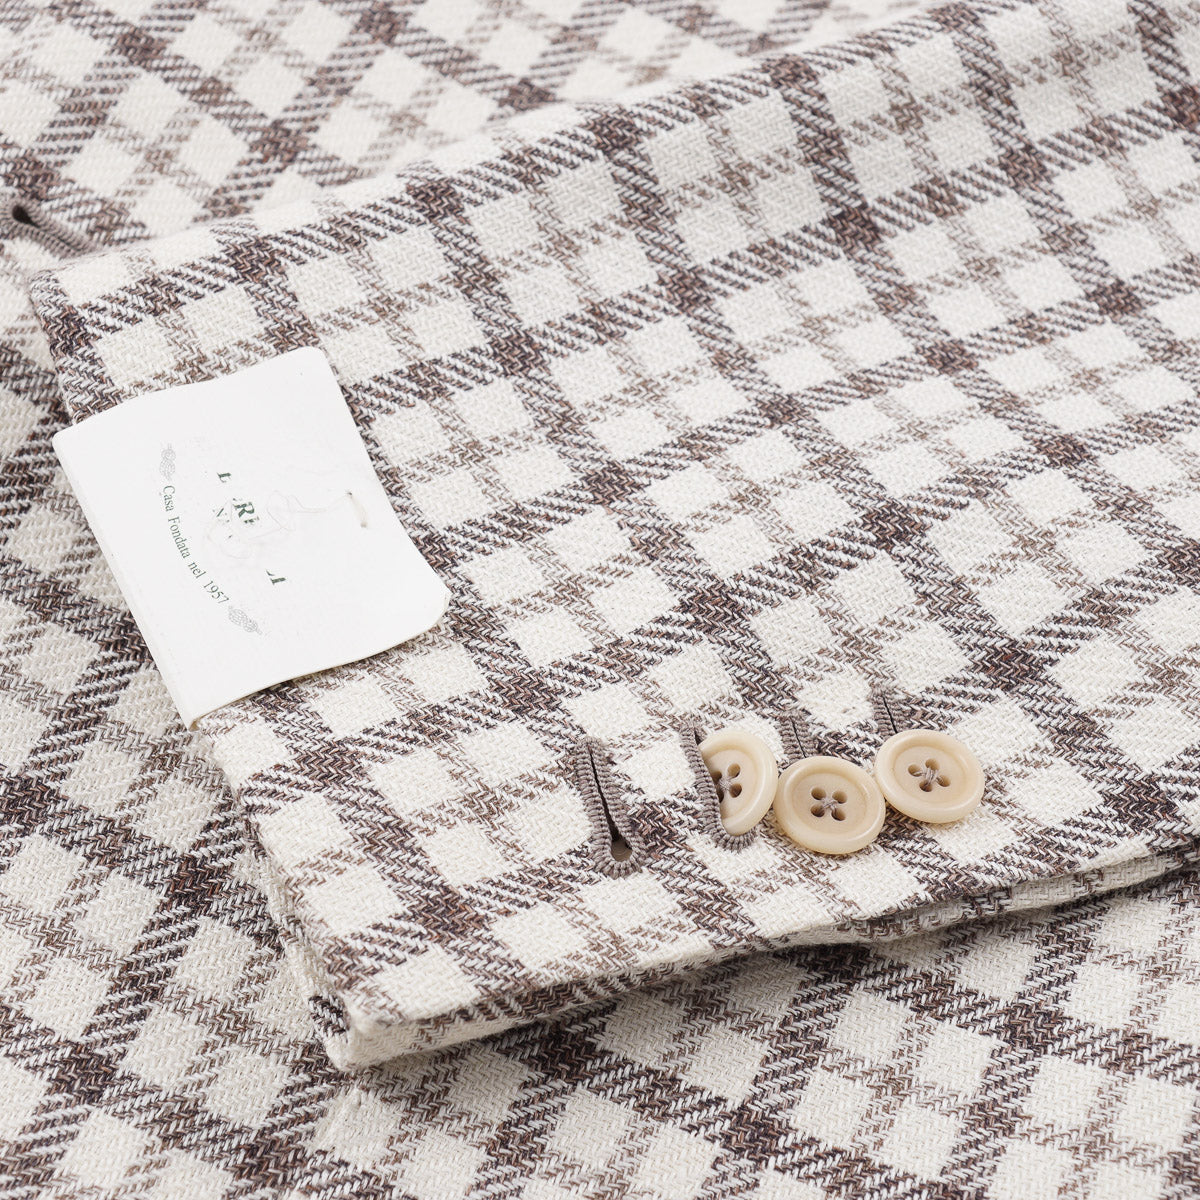 Luigi Borrelli Linen-Silk-Cotton Sport Coat - Top Shelf Apparel